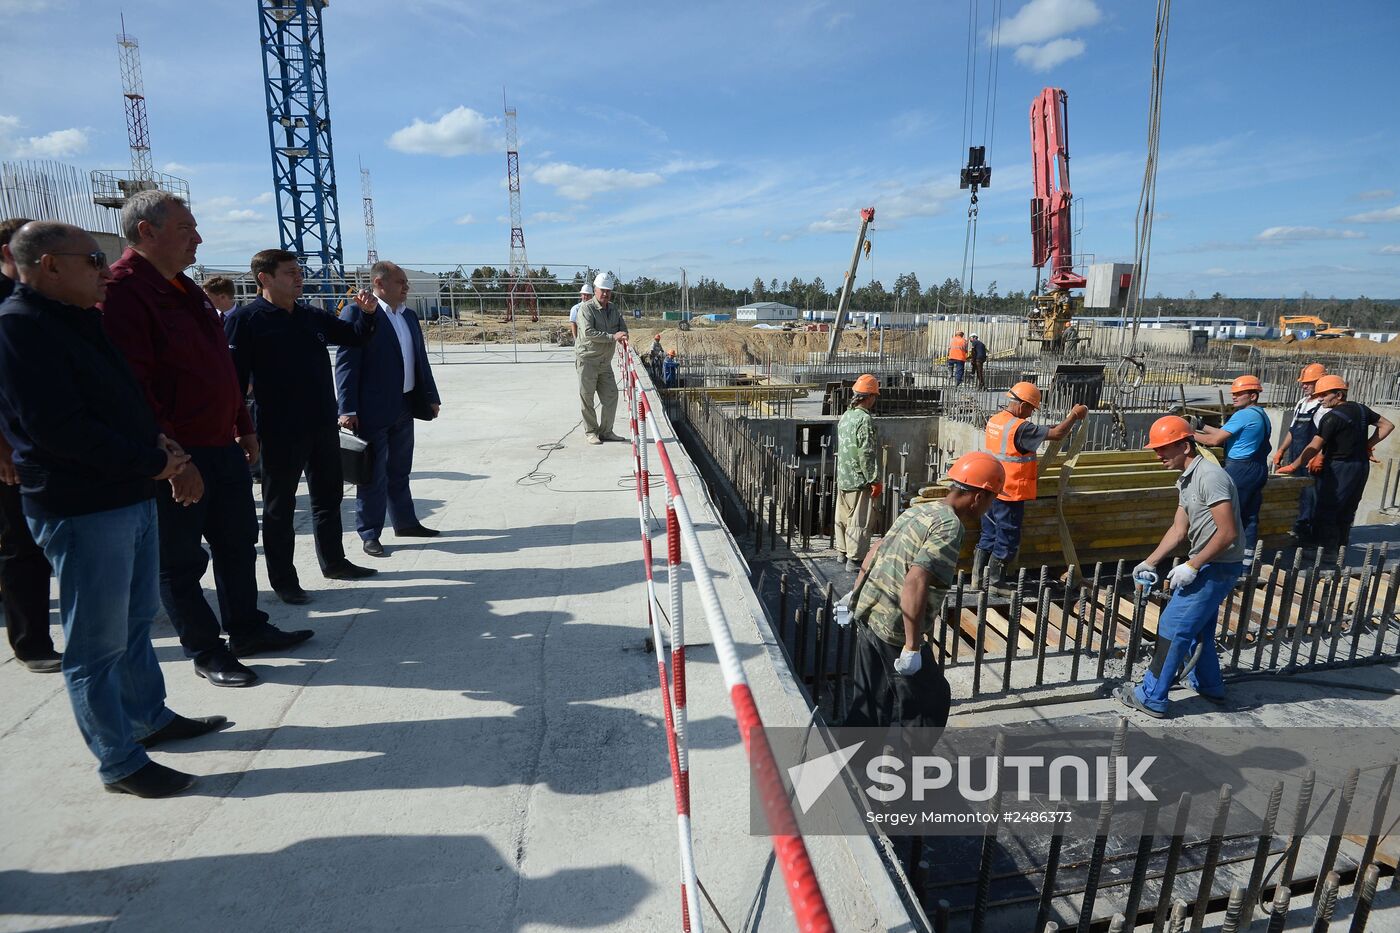 Dmitry Rogozin's visit to Vostochny space center under construction